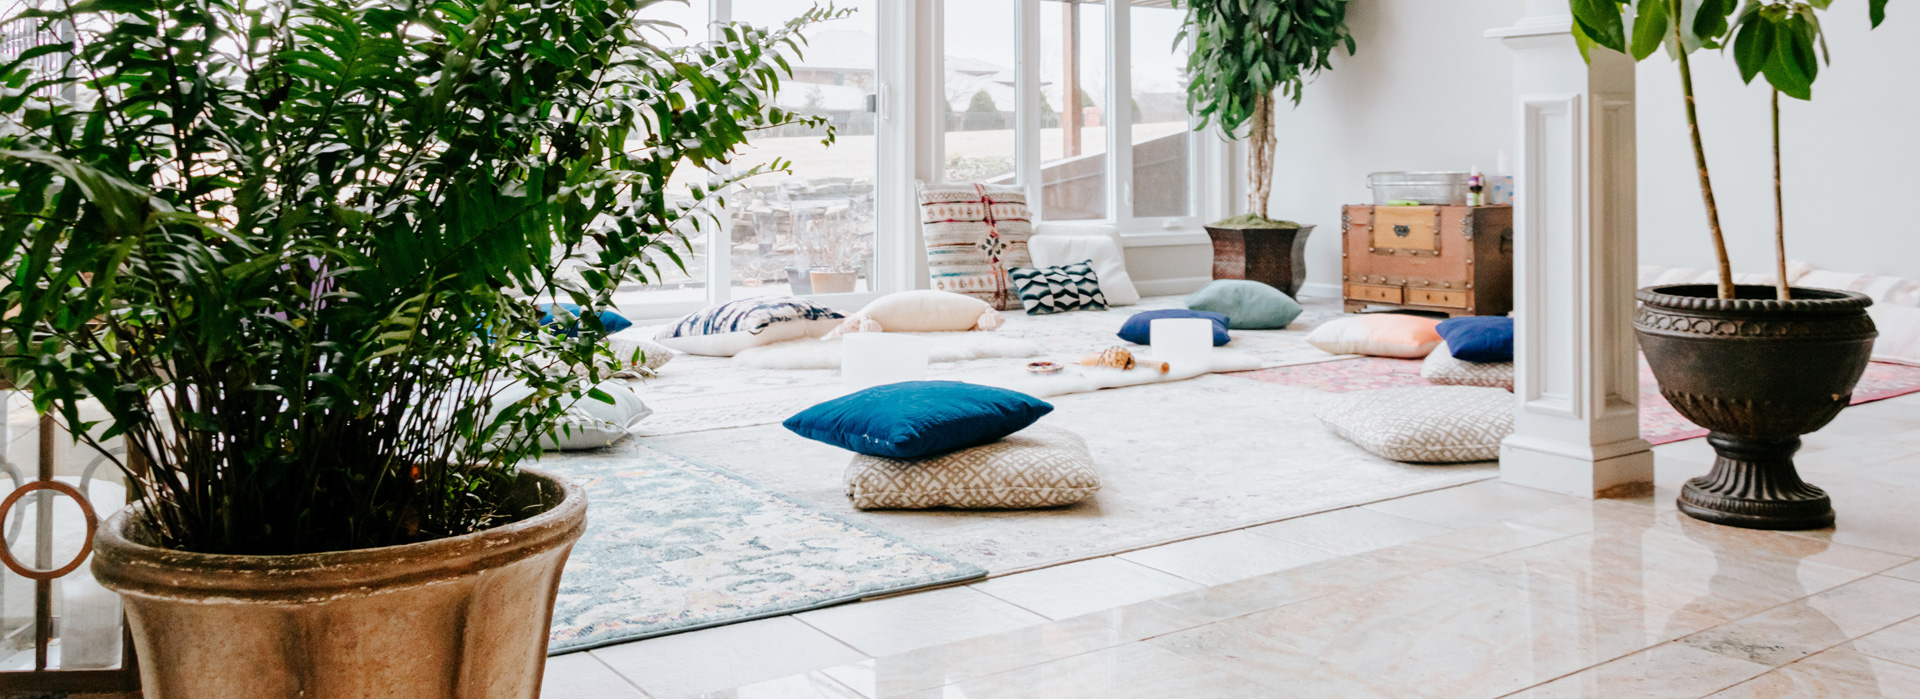 Yoga Studio Design, Meditation Room Ideas For Home